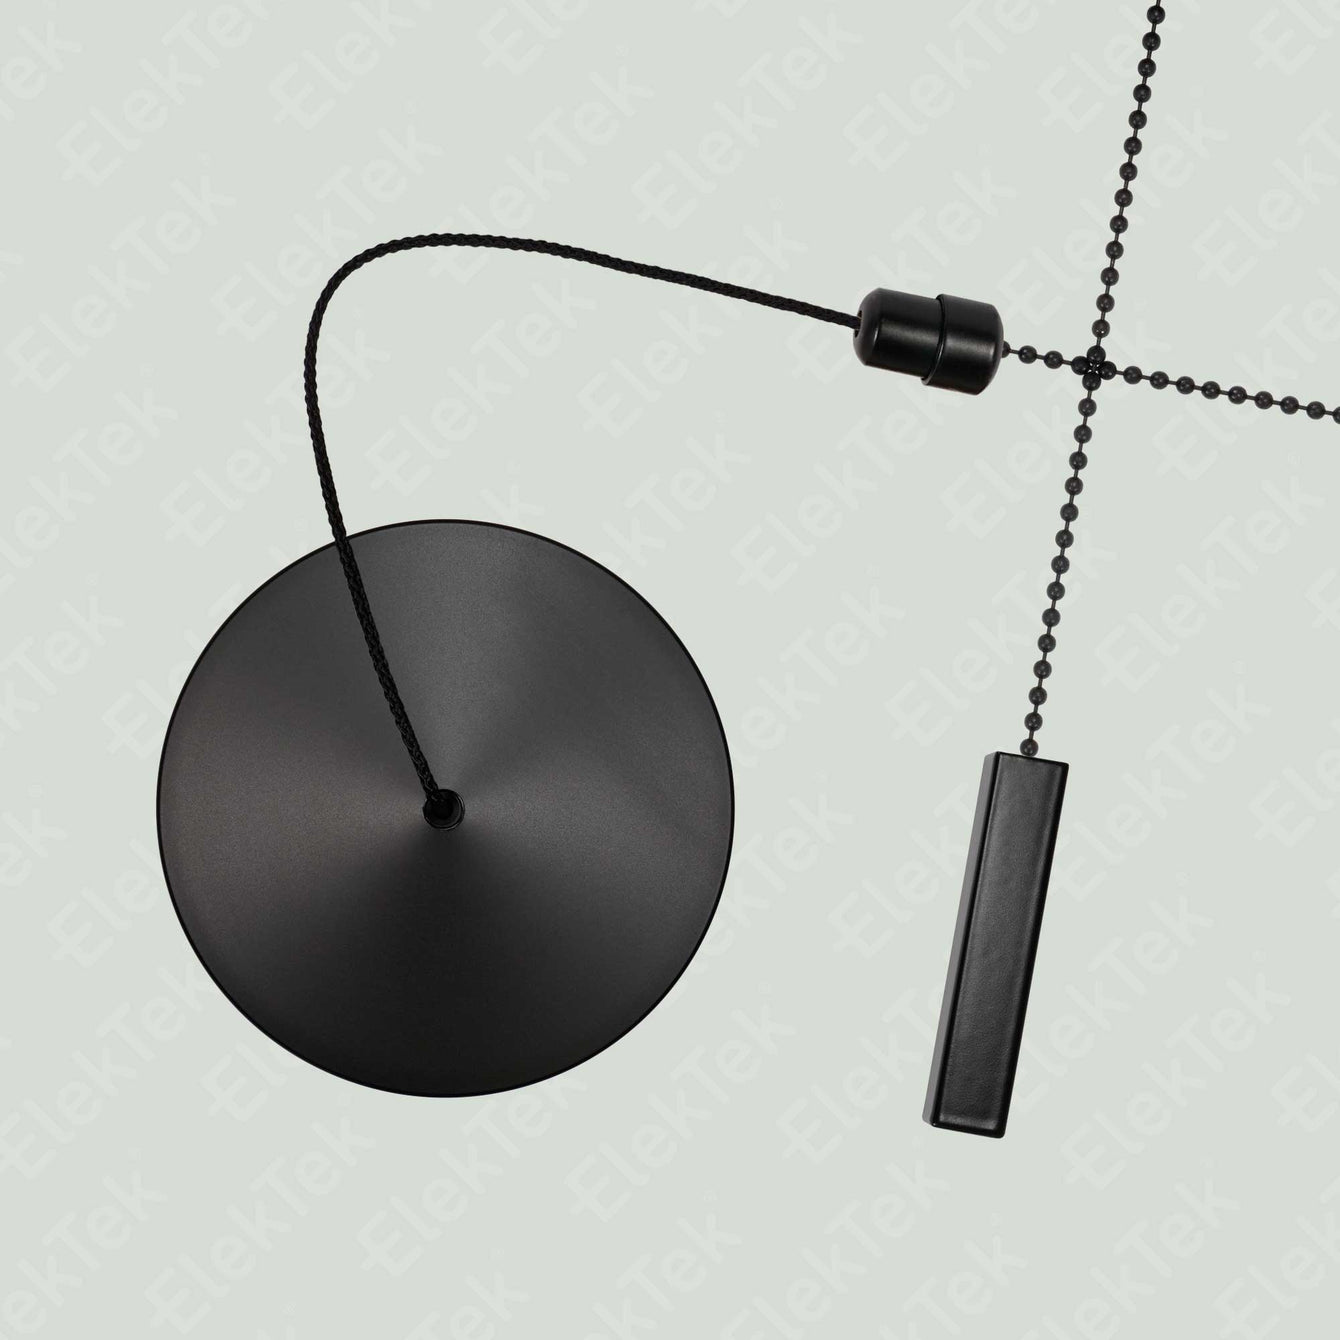 ElekTek Premium Matt Black Bathroom Light Pull Cord Switch Kit with Pull Chain Handle Black Ceramic Disc / Chrome